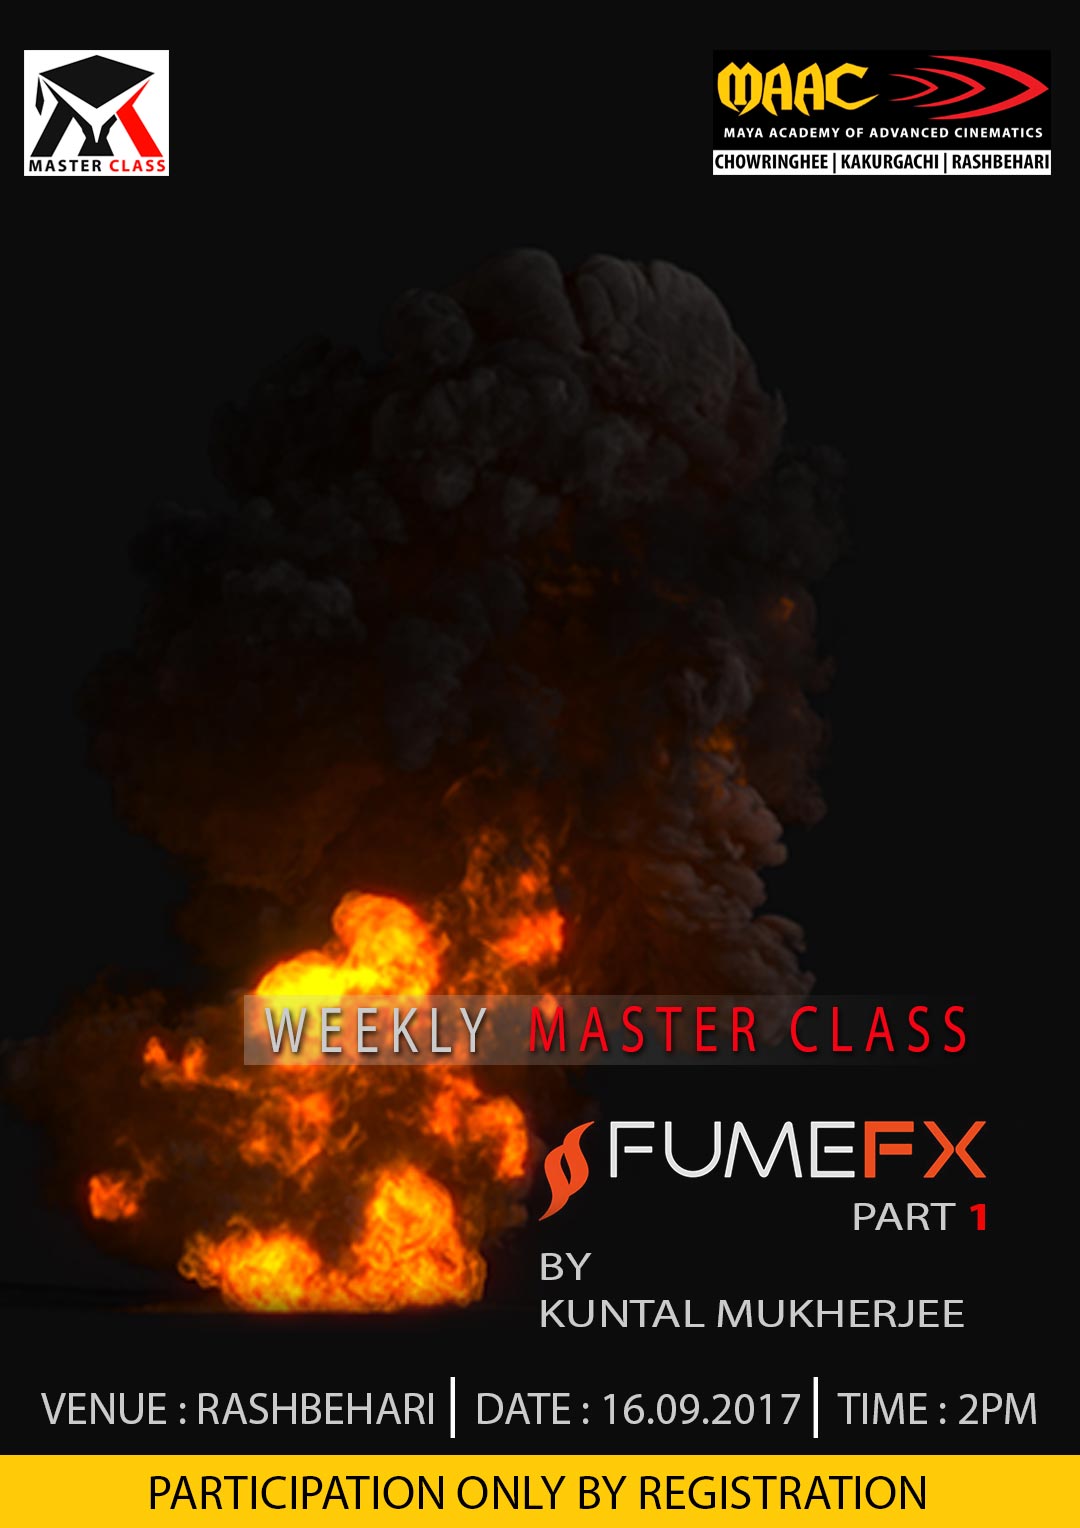 Weekly Master Class on FumeFx - Kuntal Mukherjee